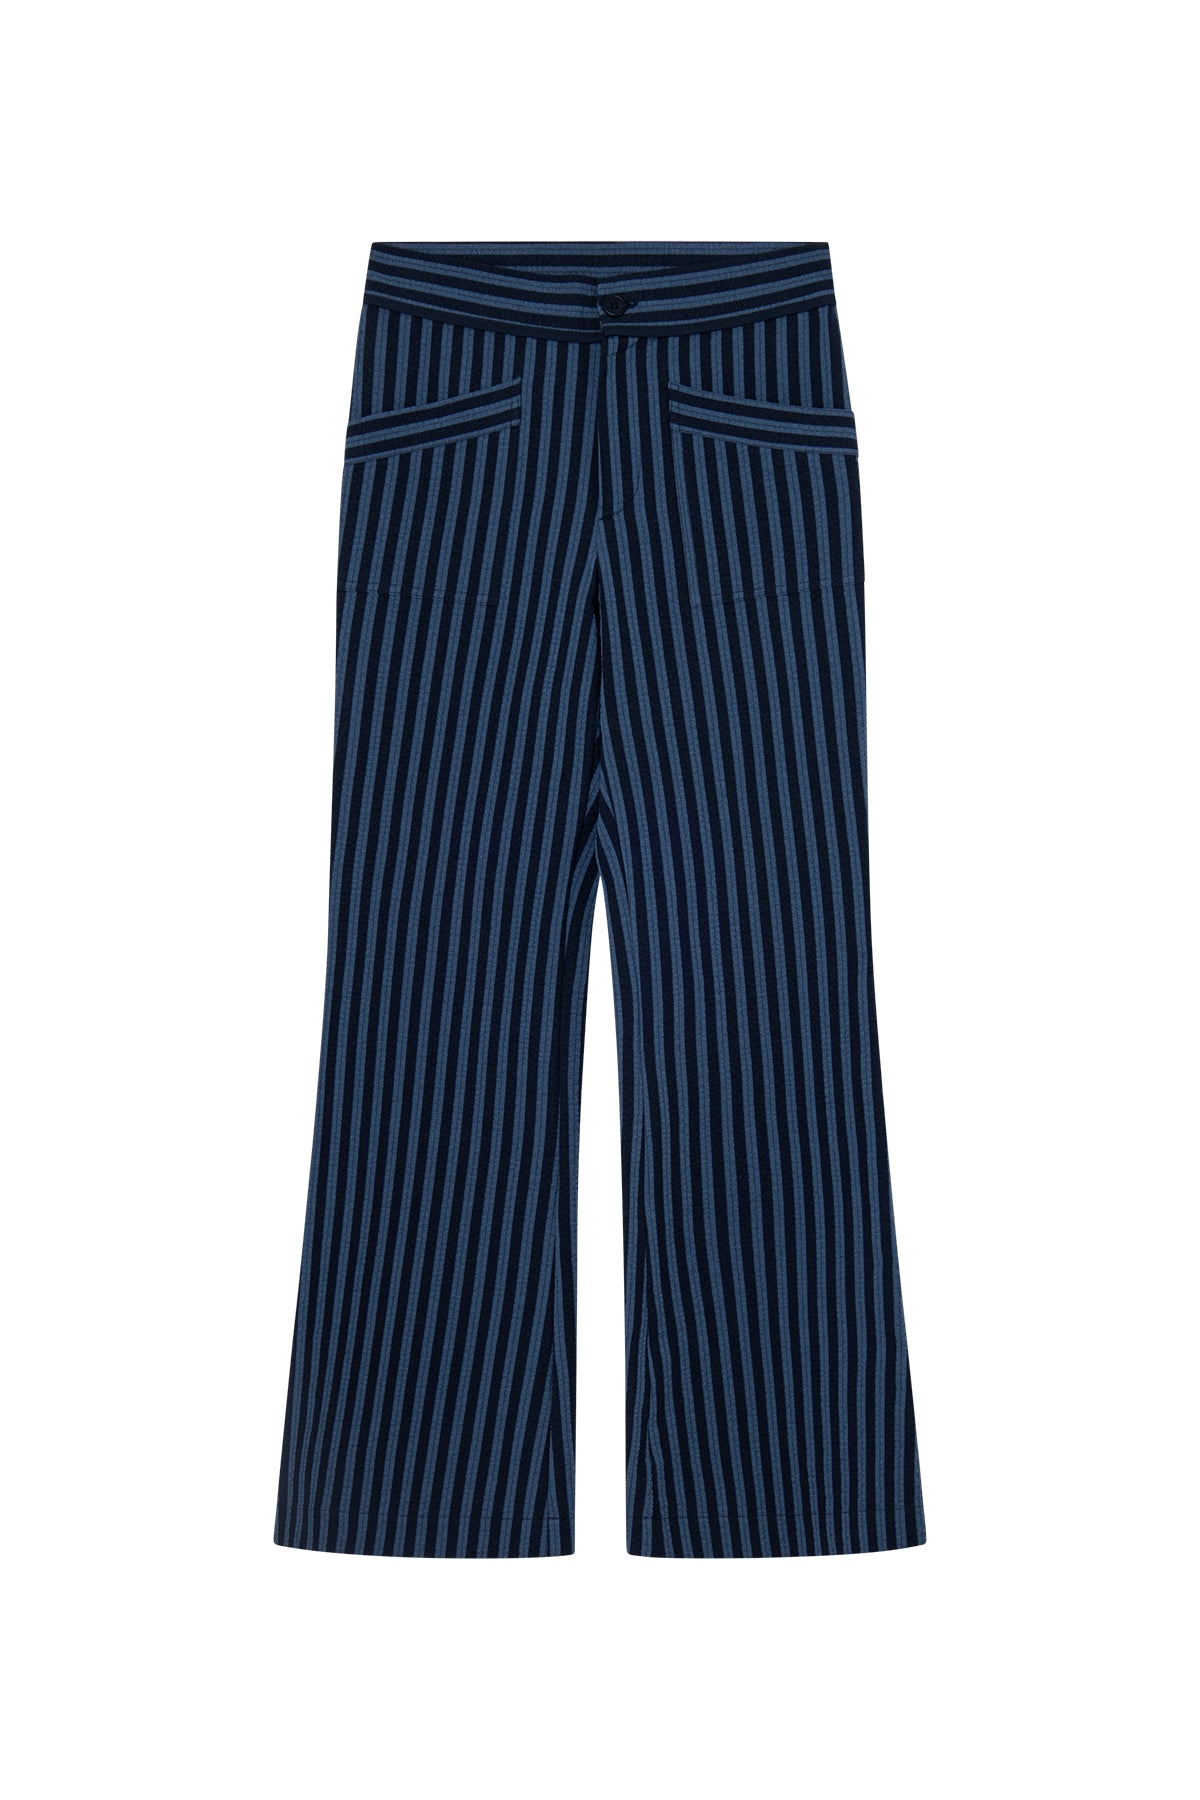 Pantalón Ana Rayas Azul